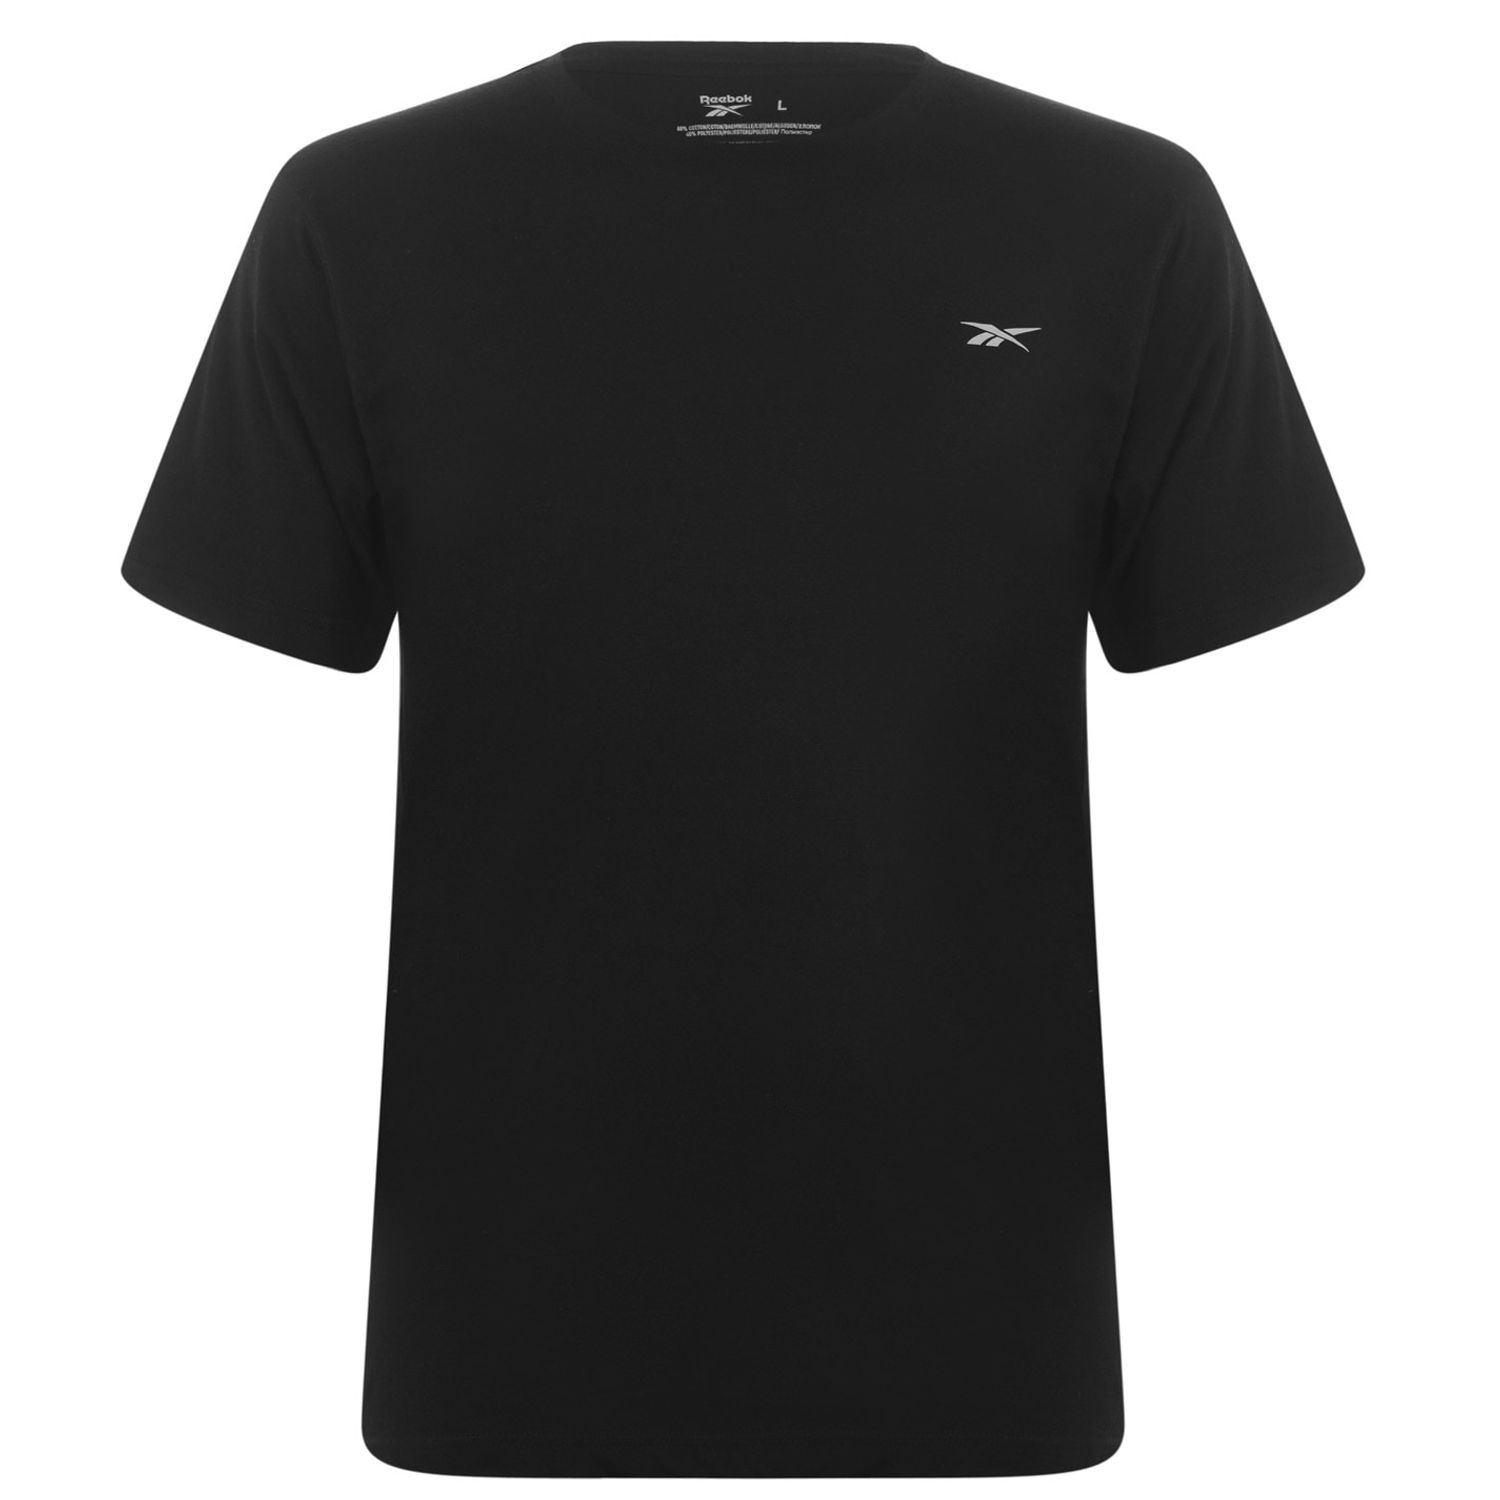 Black Reebok 3 Pack T-Shirt Mens - Get The Label